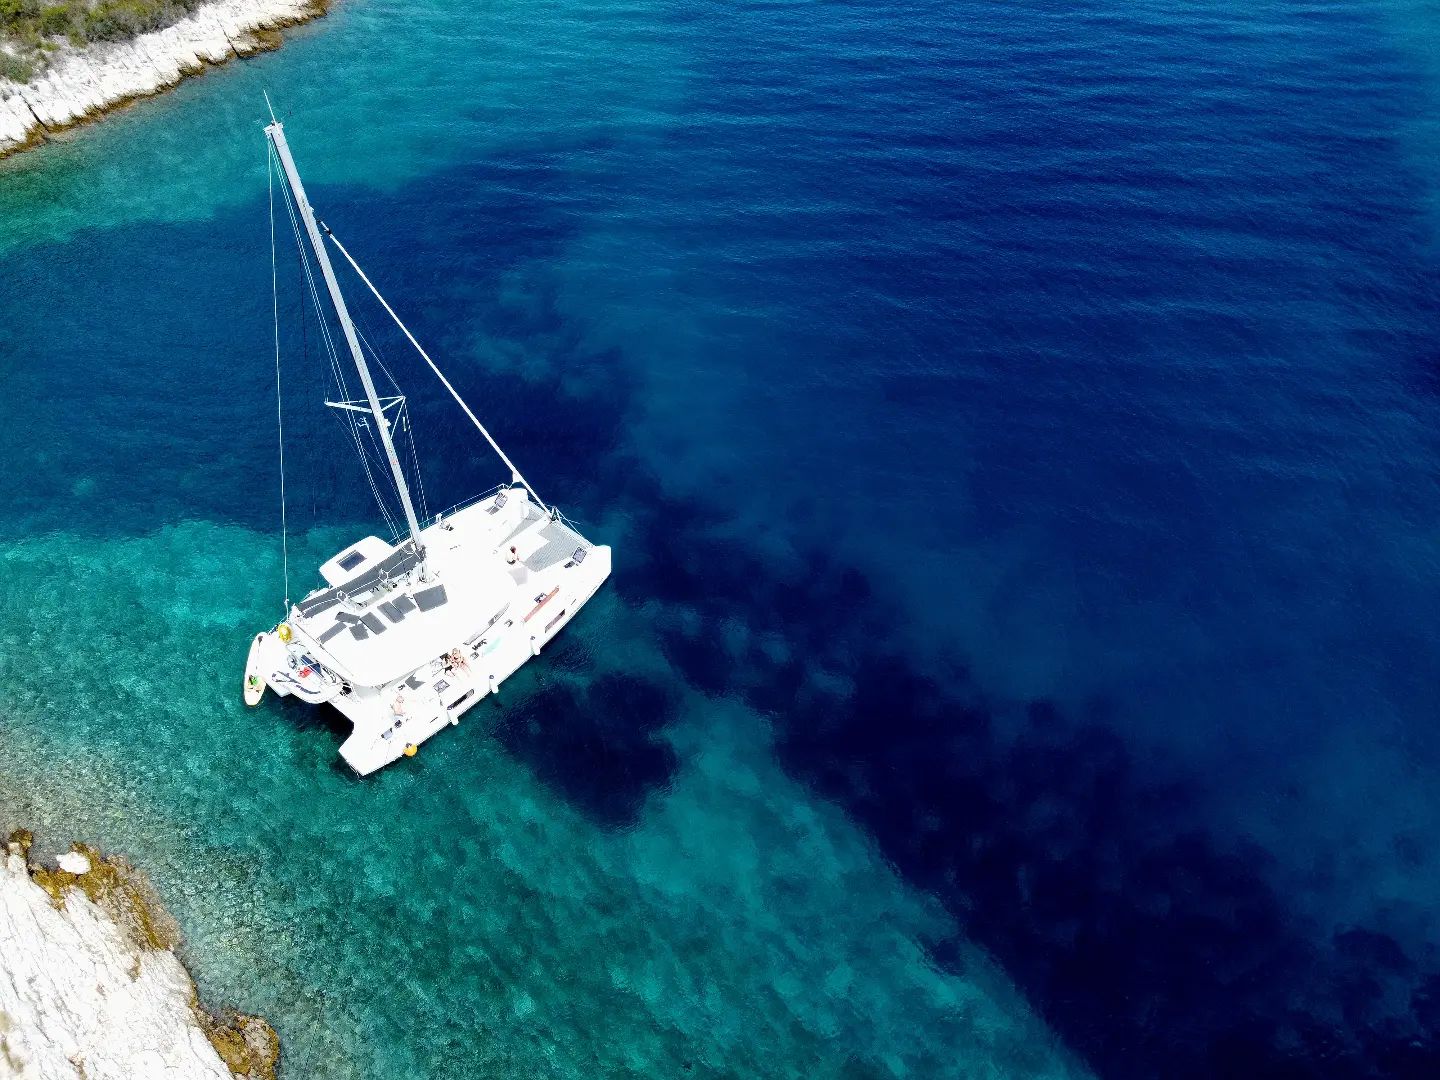 Docked catamaran in the Adriatic Sea